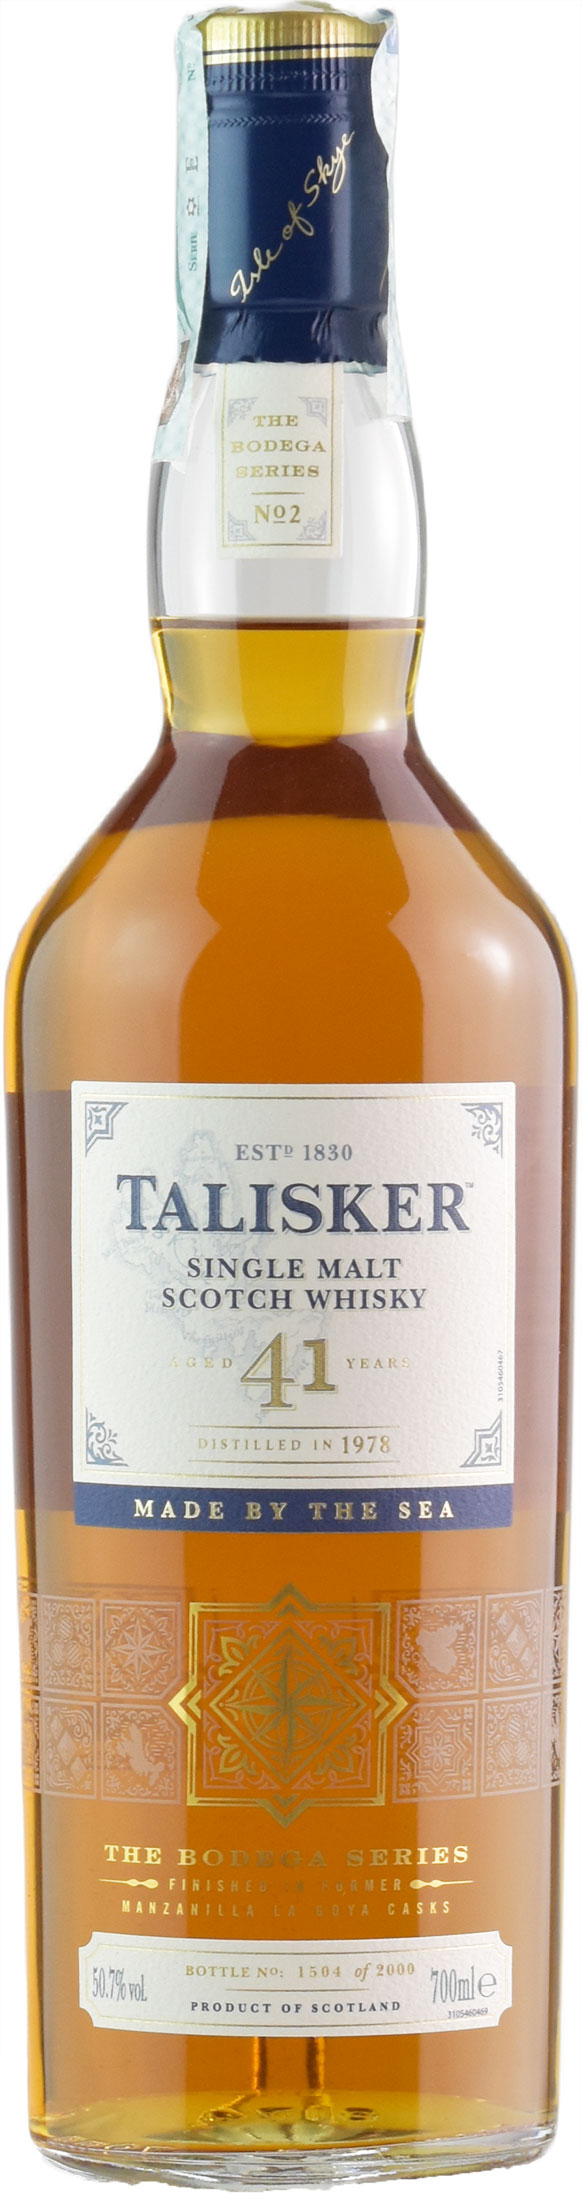 Talisker Scotch Whisky Single Malt The bodega series 41 Anni